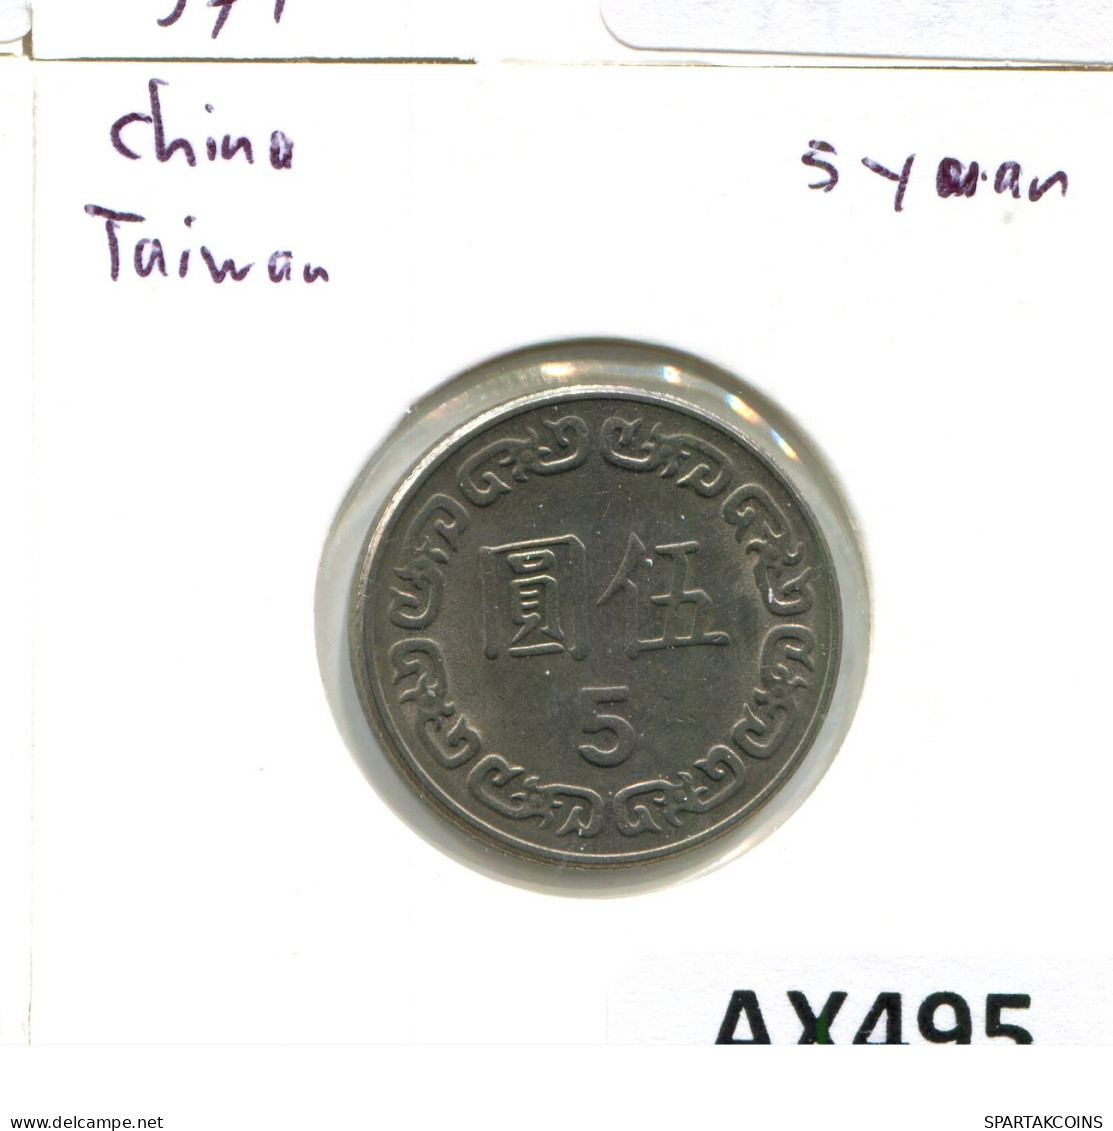 5 NEW DOLLARS 1981 TAIWAN Coin #AX495.U - Taiwan